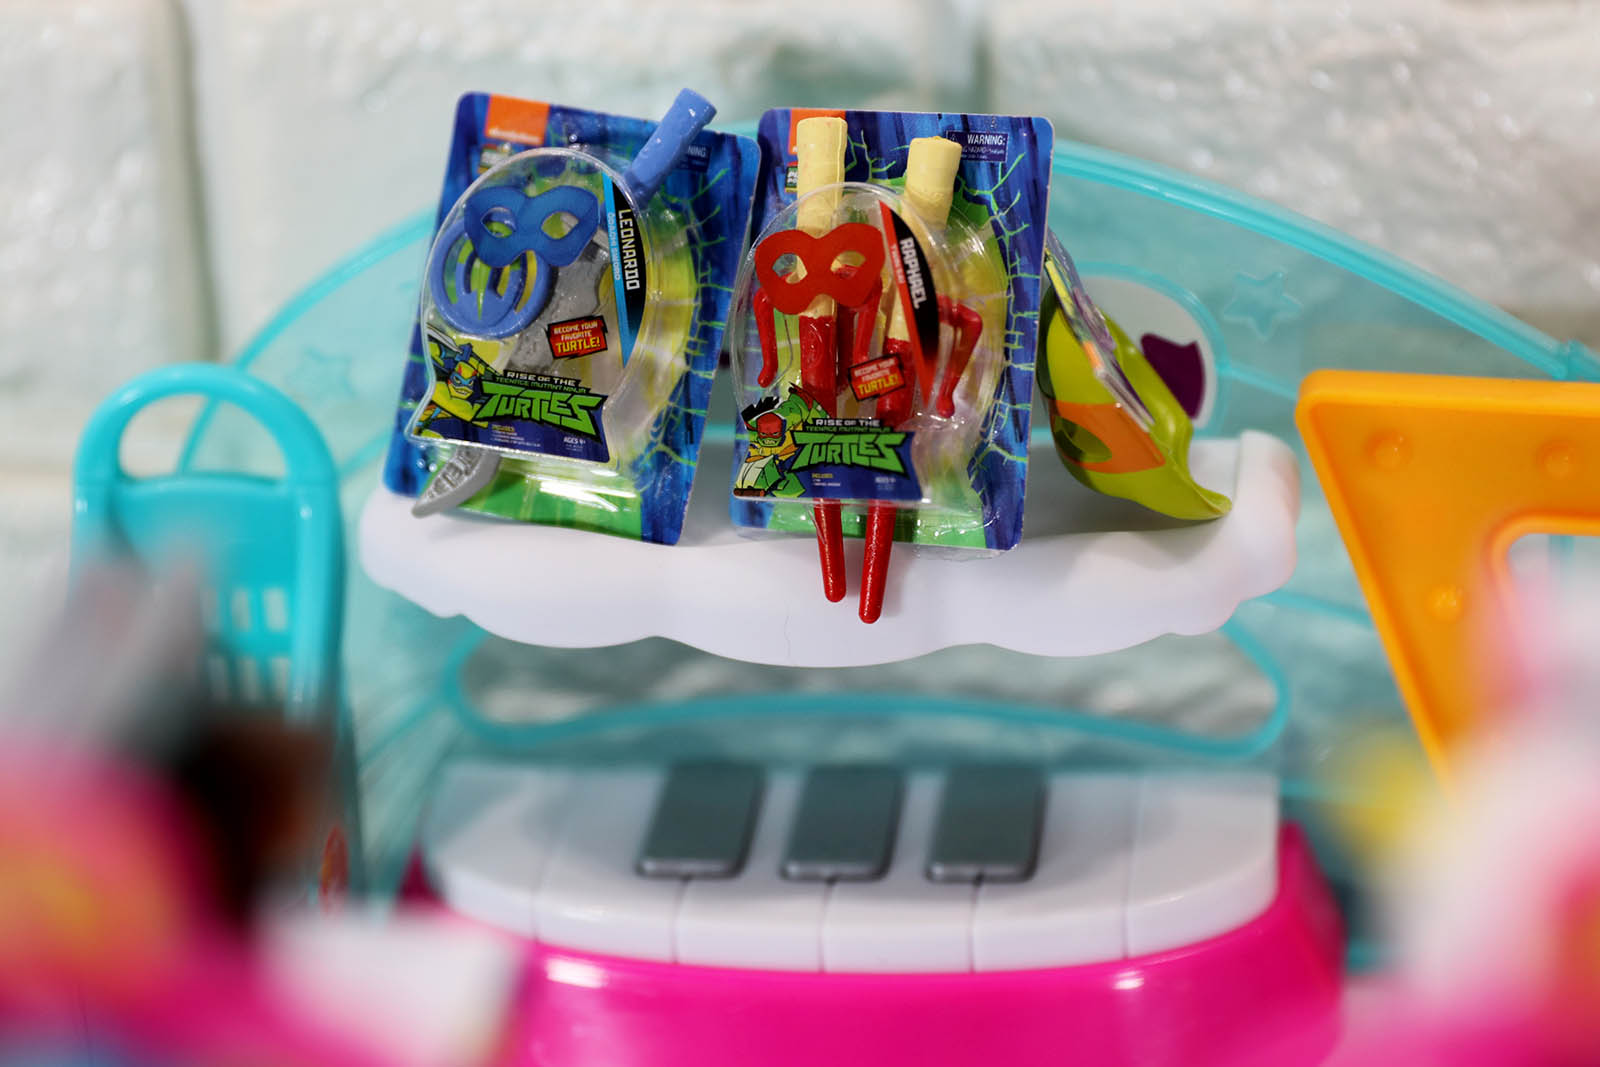 5 Surprise Toy Mini Brands Mini Toy Shop Playset by ZURU